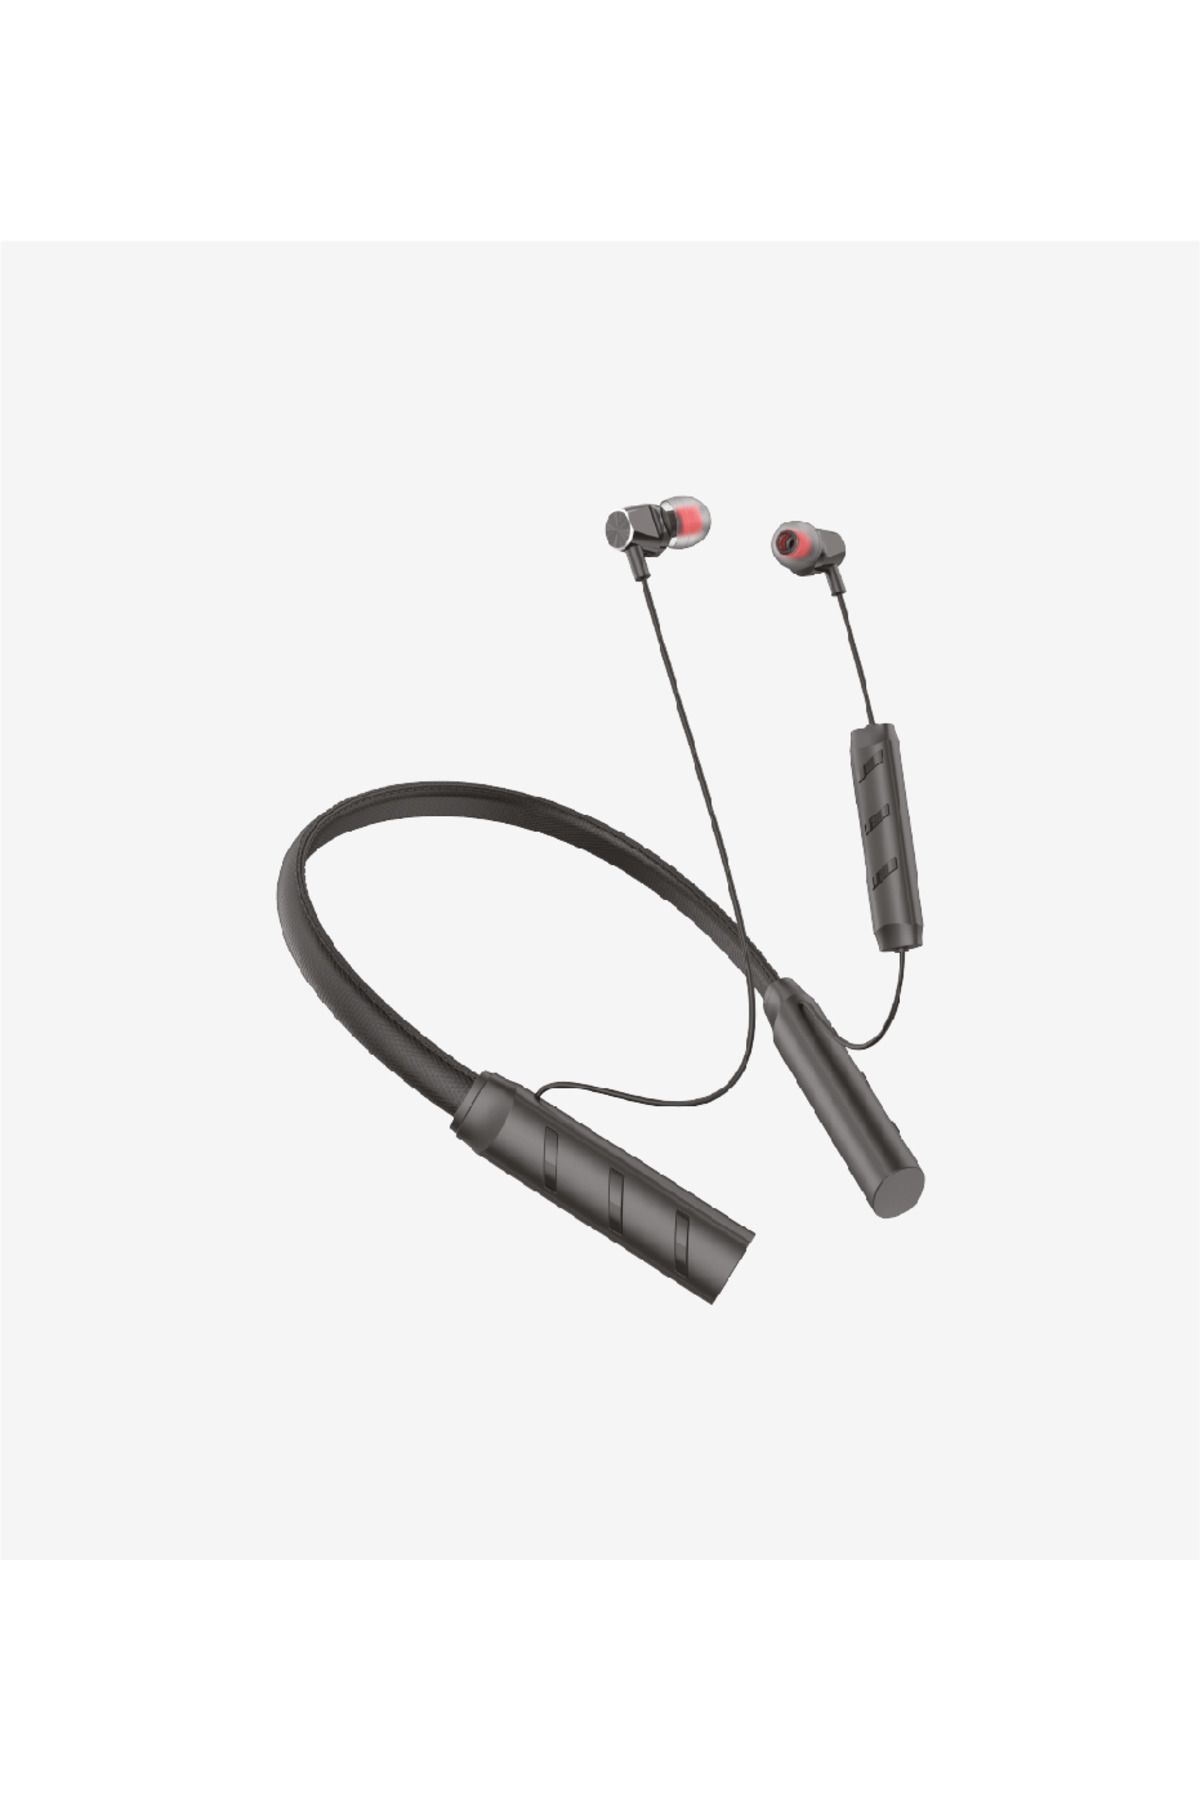 Linktech H994+ Neckband (Ense Tipi) Silikonlu Bluetooth Kulaklık - 136 Saat